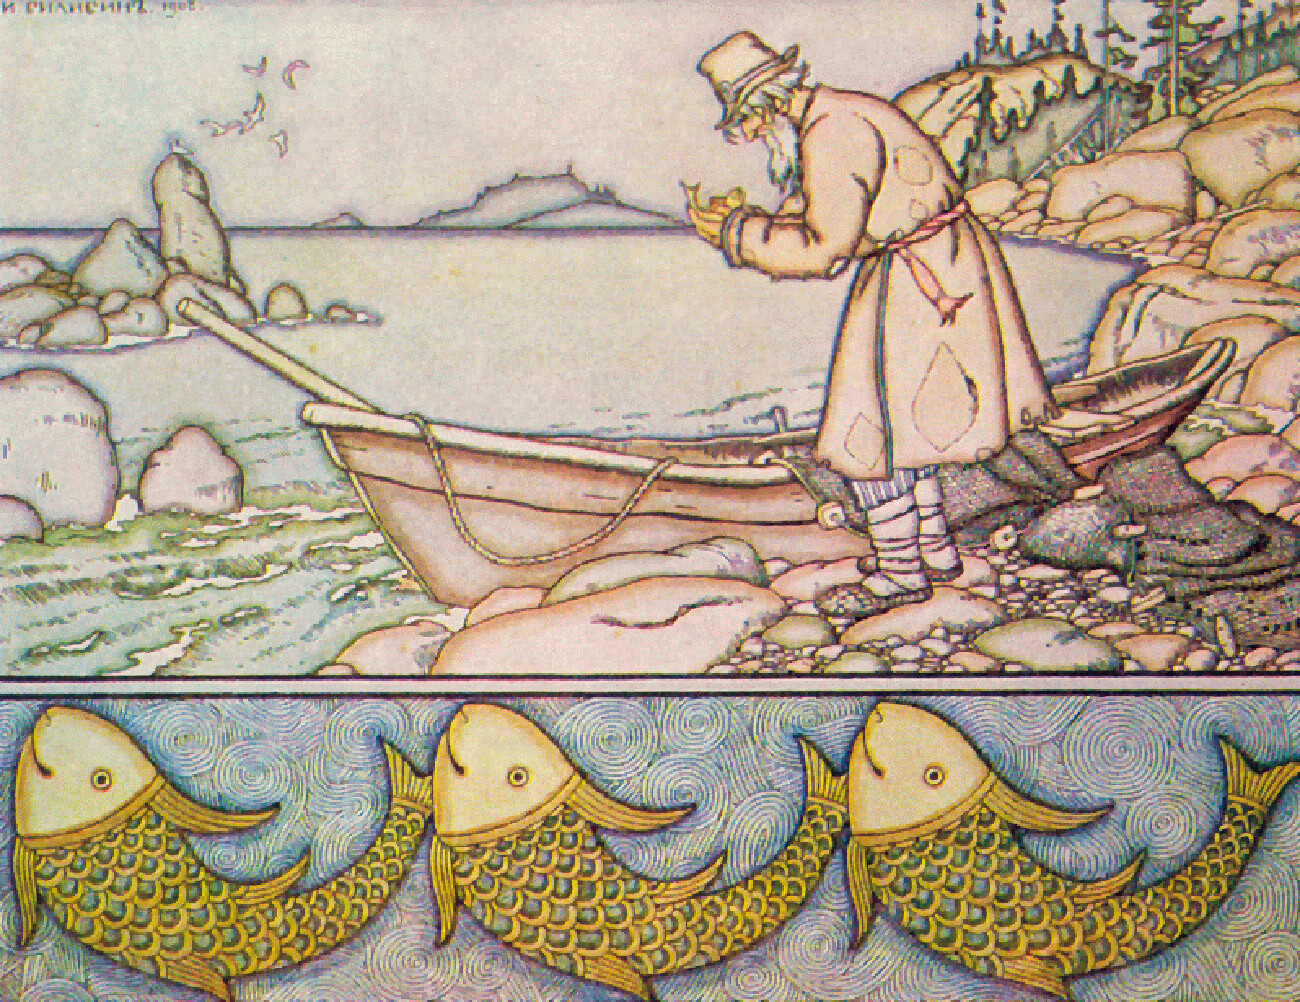 Ilustrasi Ivan Bilibin untuk dongeng “The Tale of the Fisherman and the Fish”